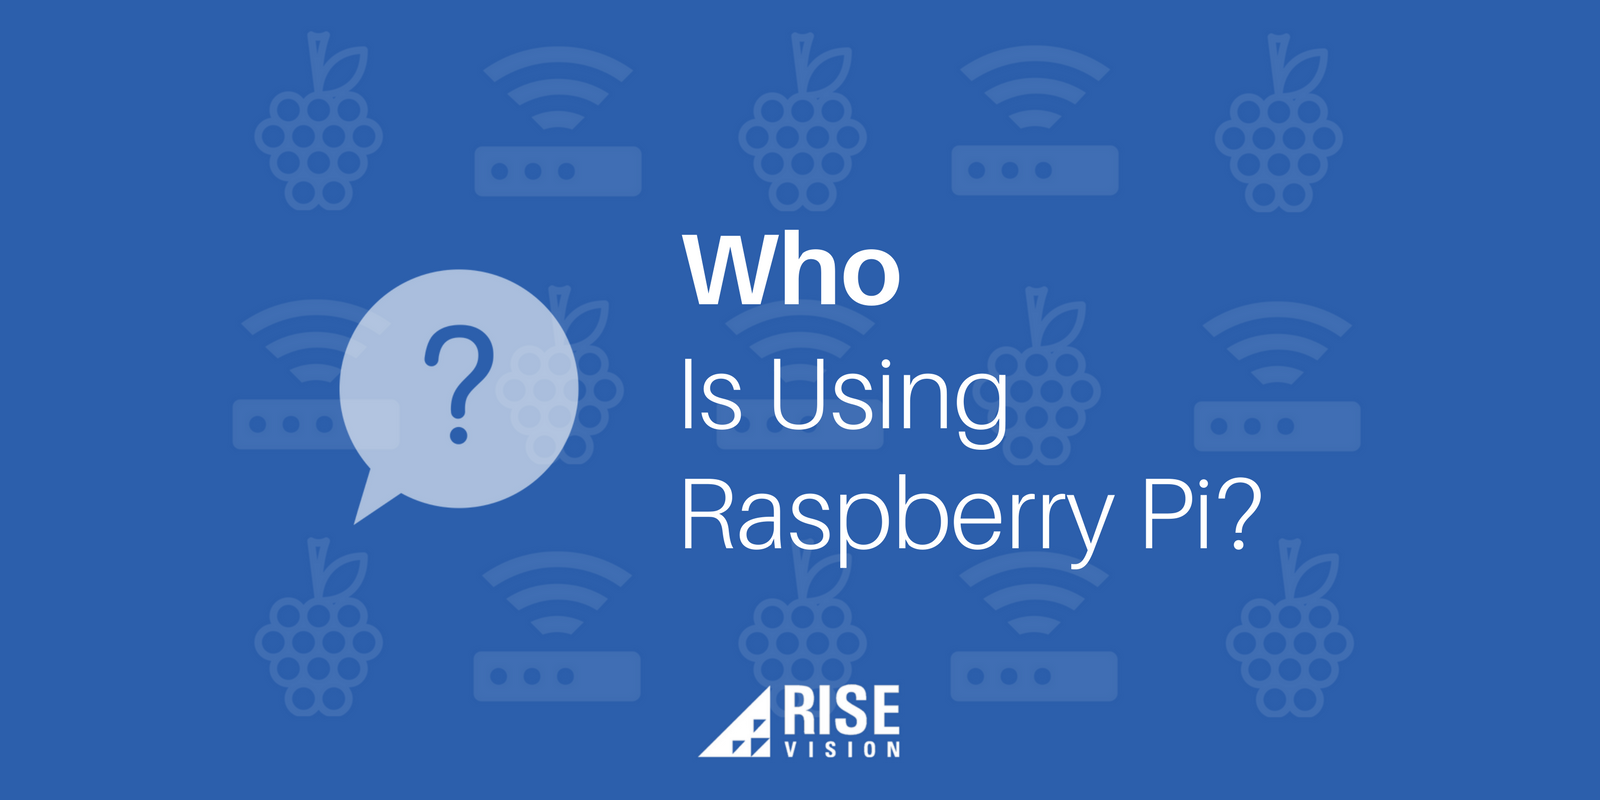 Who Uses Raspberry Pi for Digital Signage